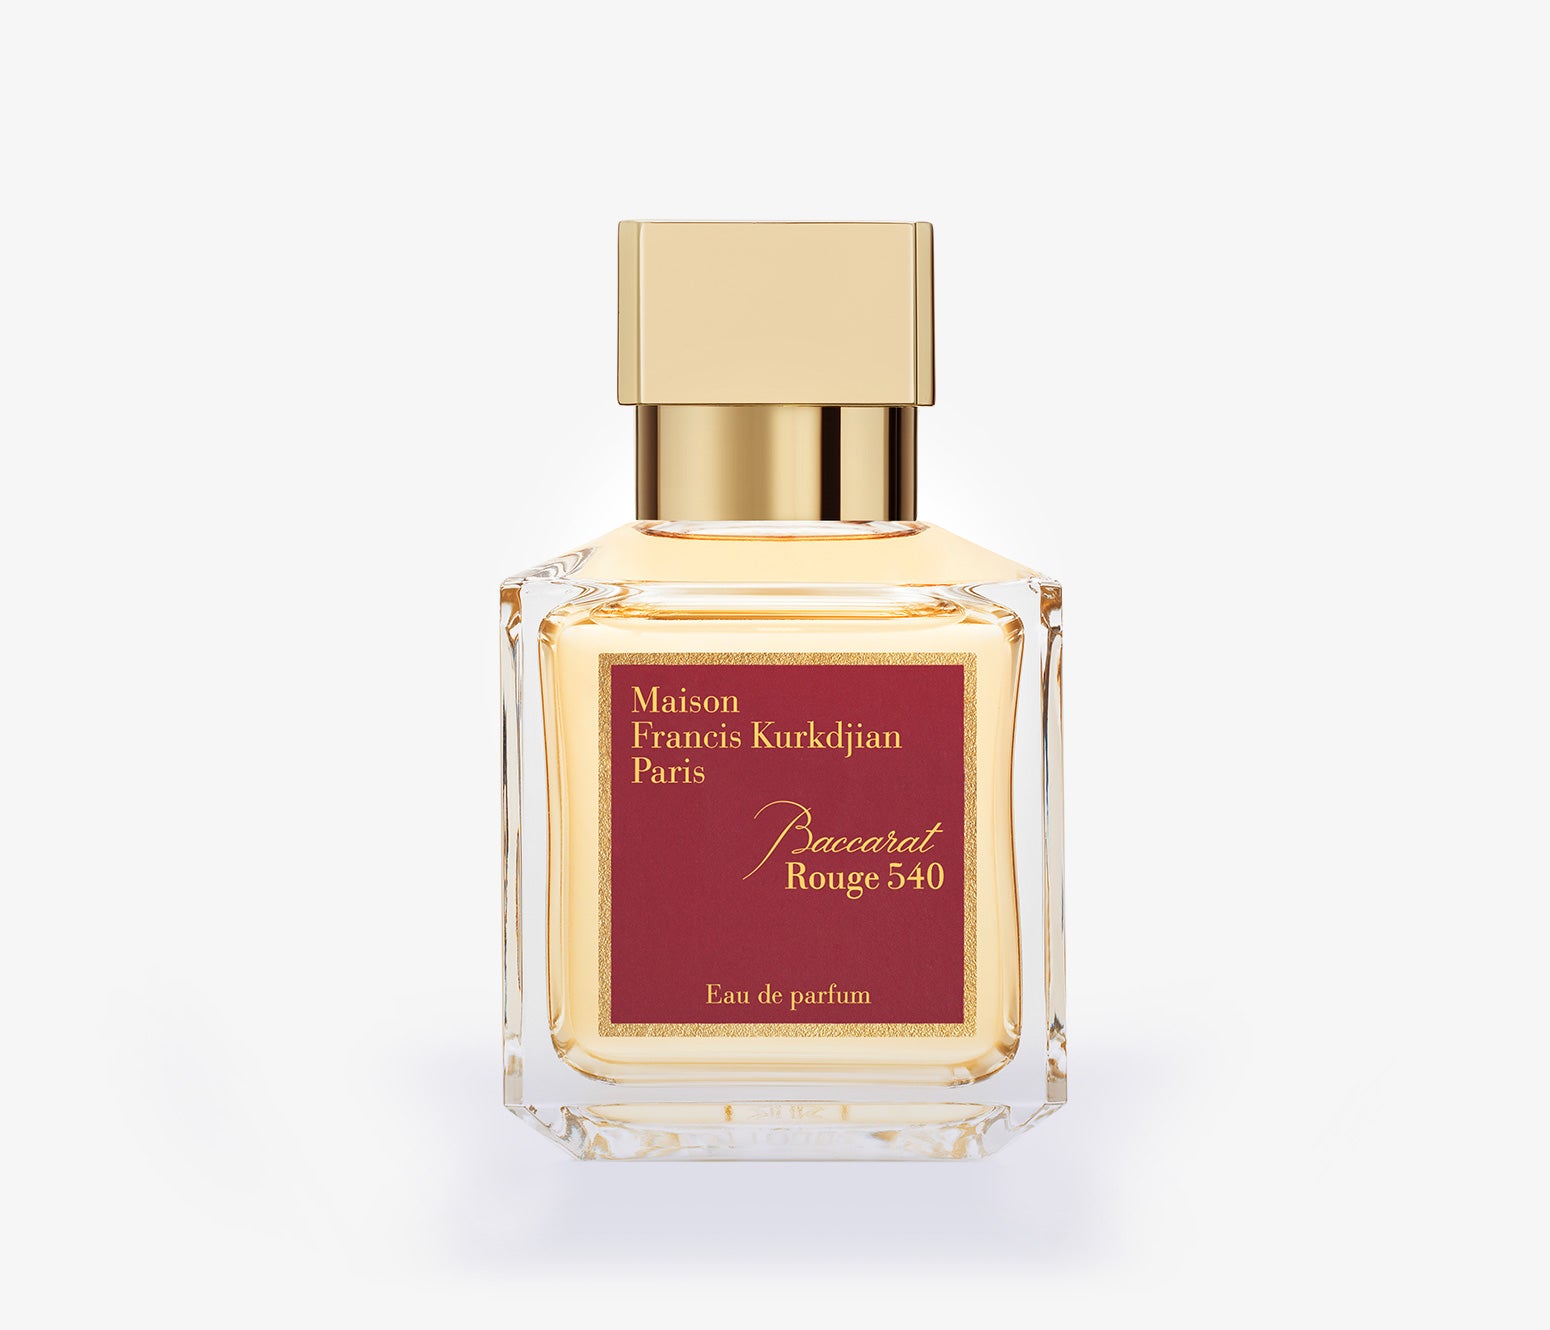 Maison Francis Kurkdjian - Baccarat Rouge 540 - 70ml - QIC001 - Product Image - Fragrance - Les Senteurs